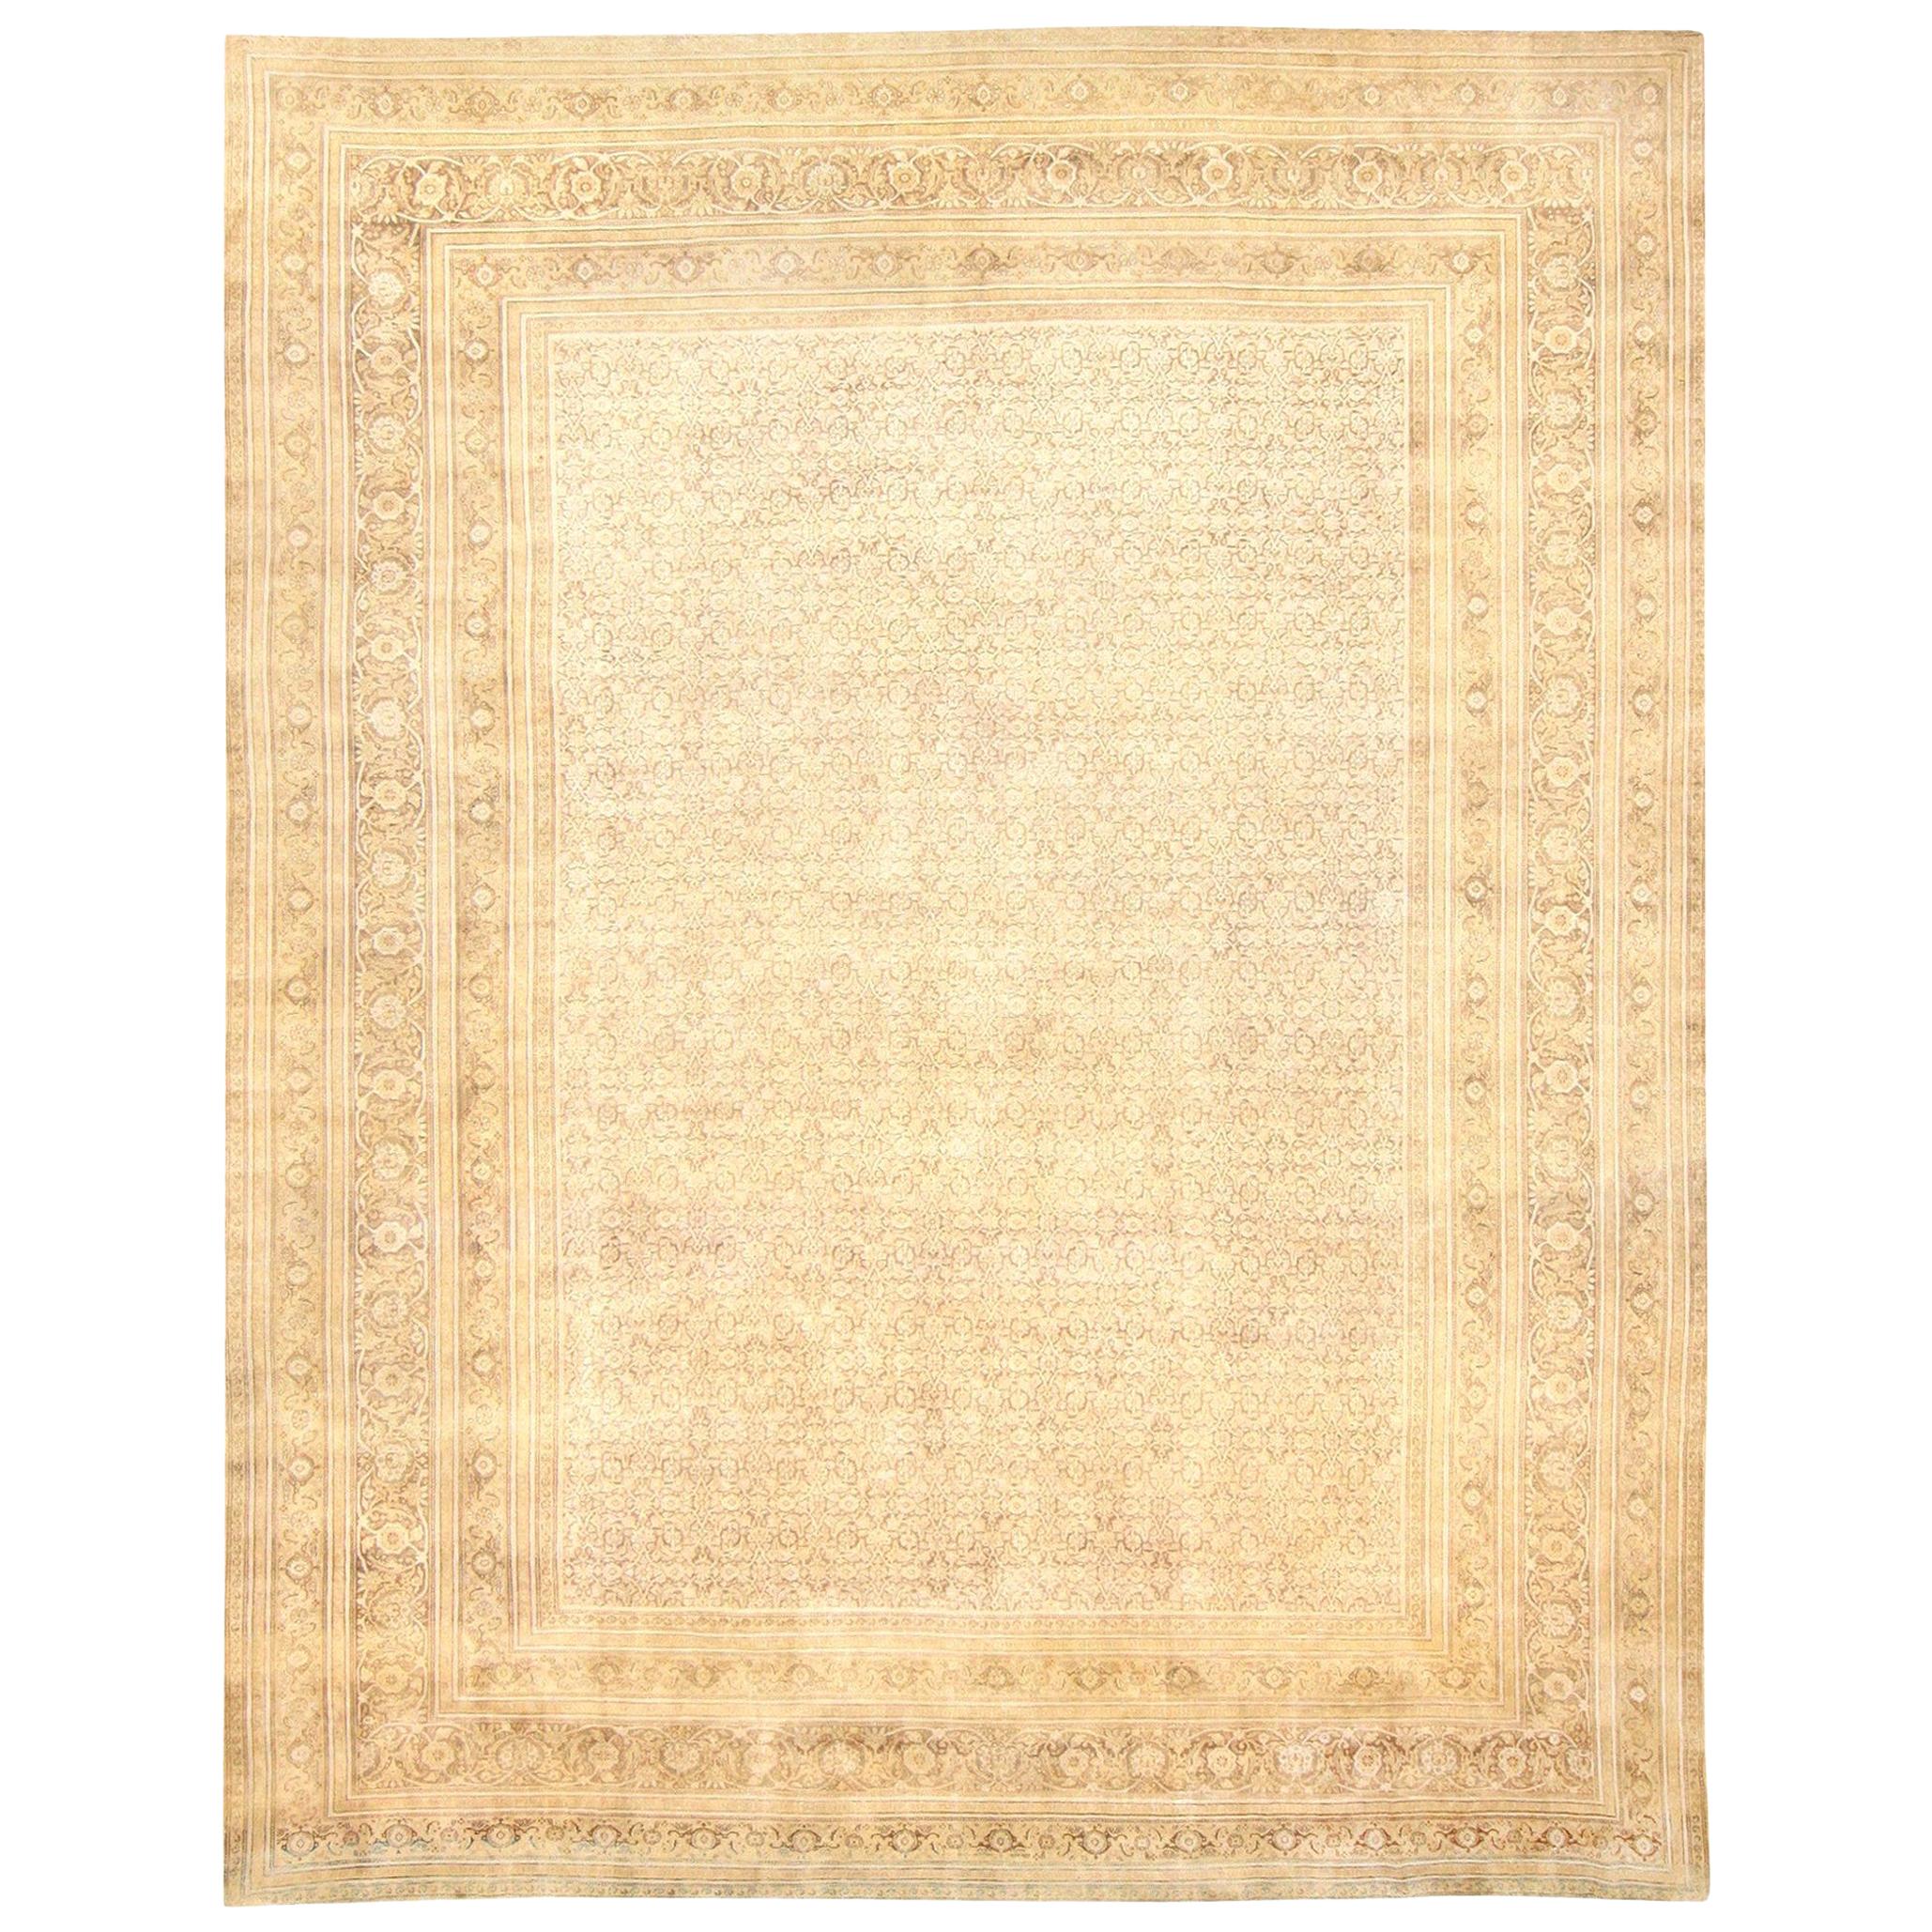 Nazmiyal Collection Antique Persian Tabriz Carpet. Size: 13' 7" x 16' 7" 